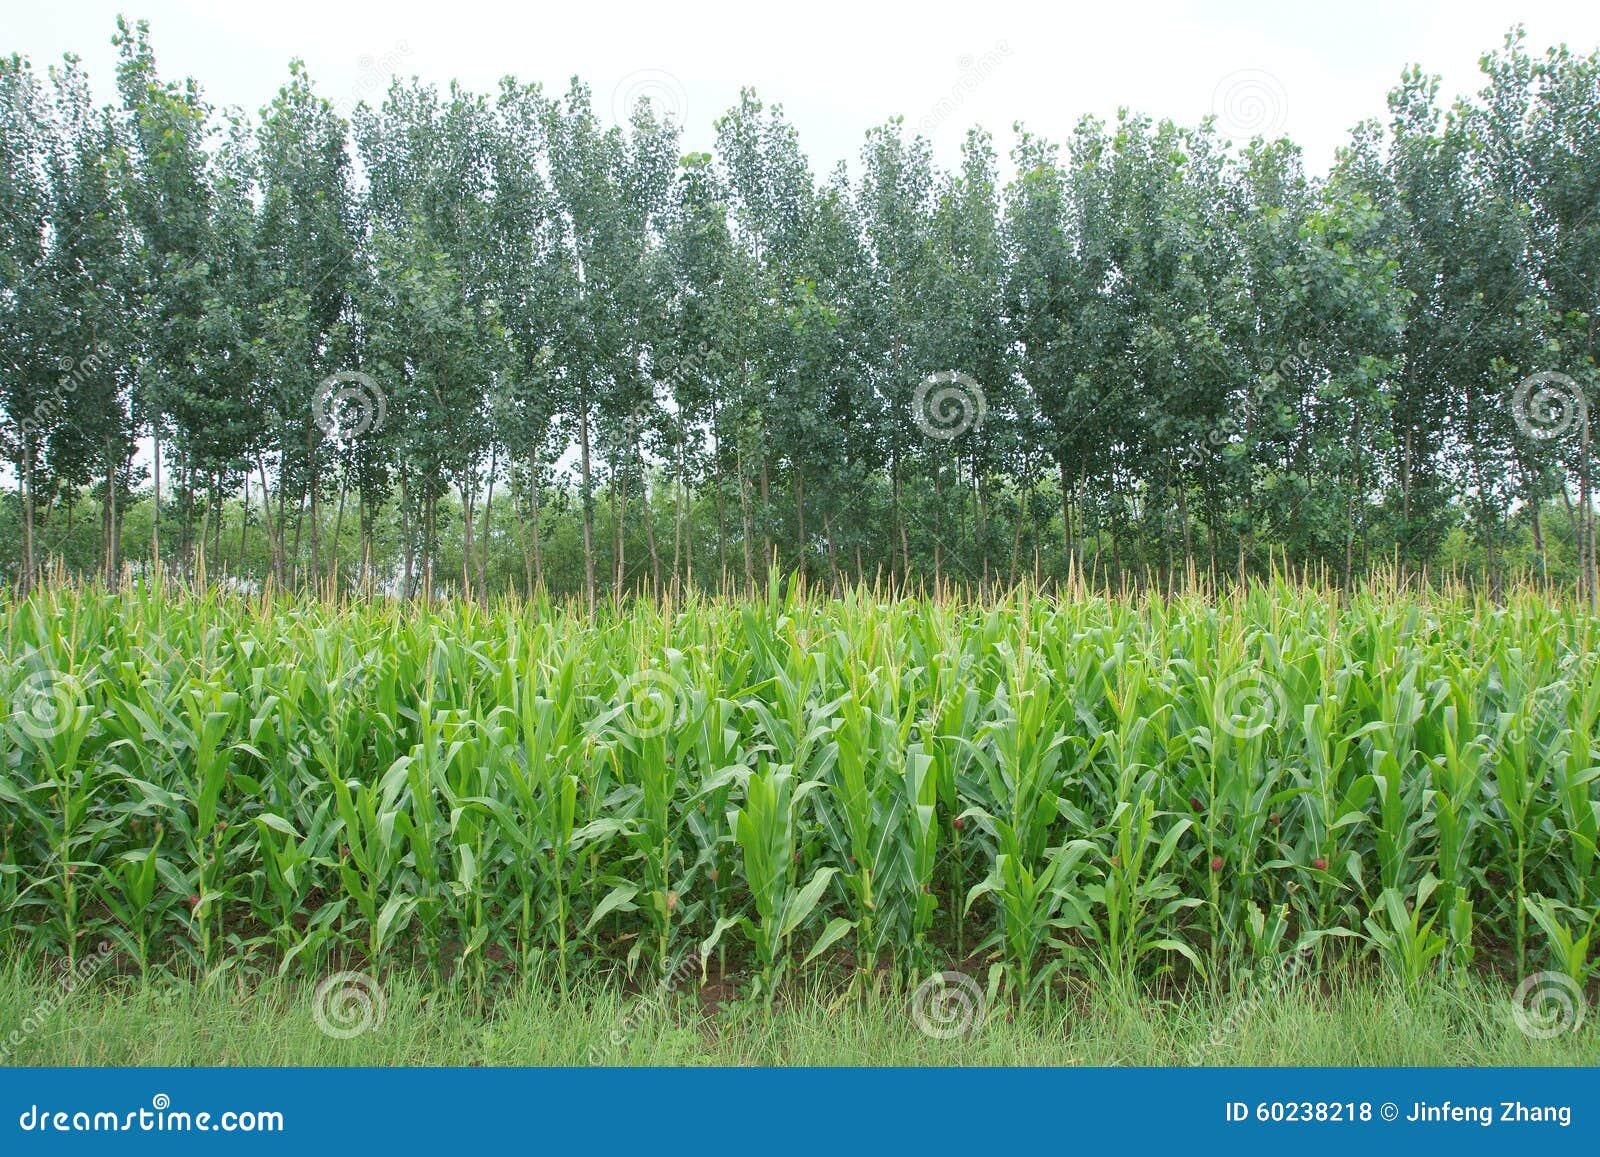 maize field and poplars